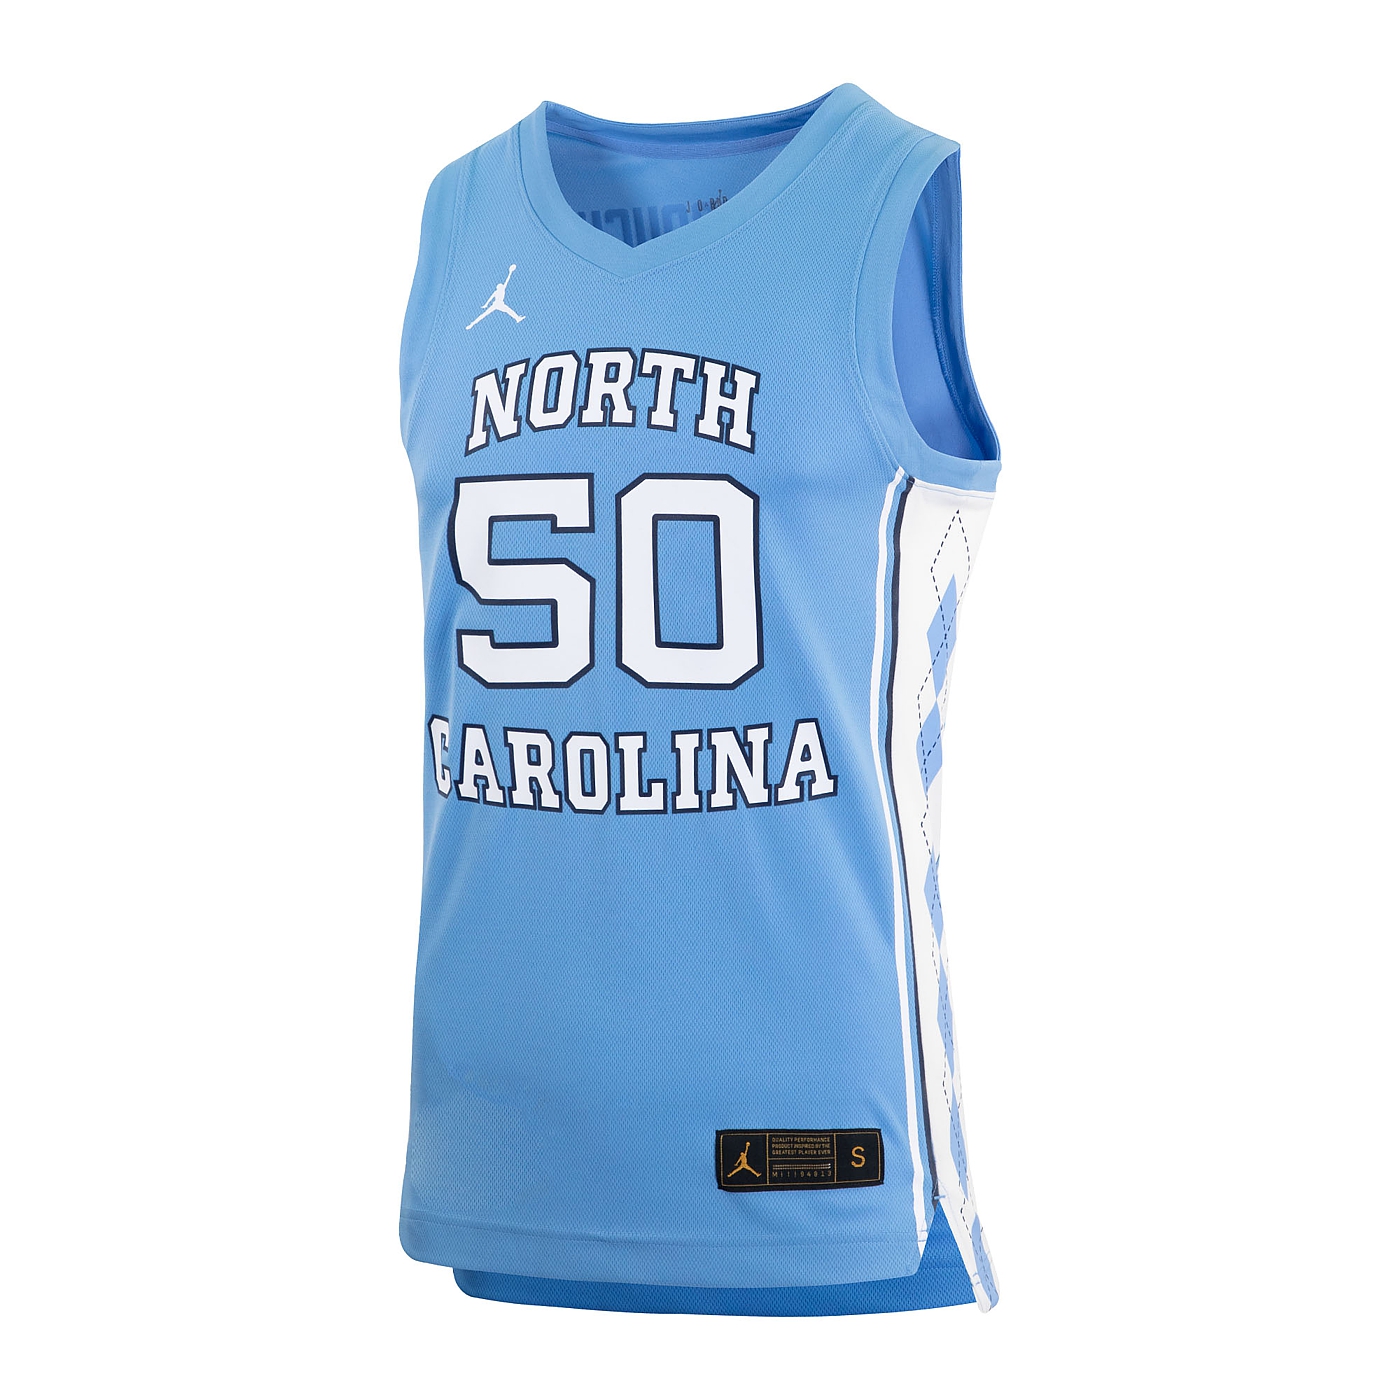 Johnny T-shirt - North Carolina Tar - Youth #50 Tyler Hansbrough Jersey (CB) by Nike